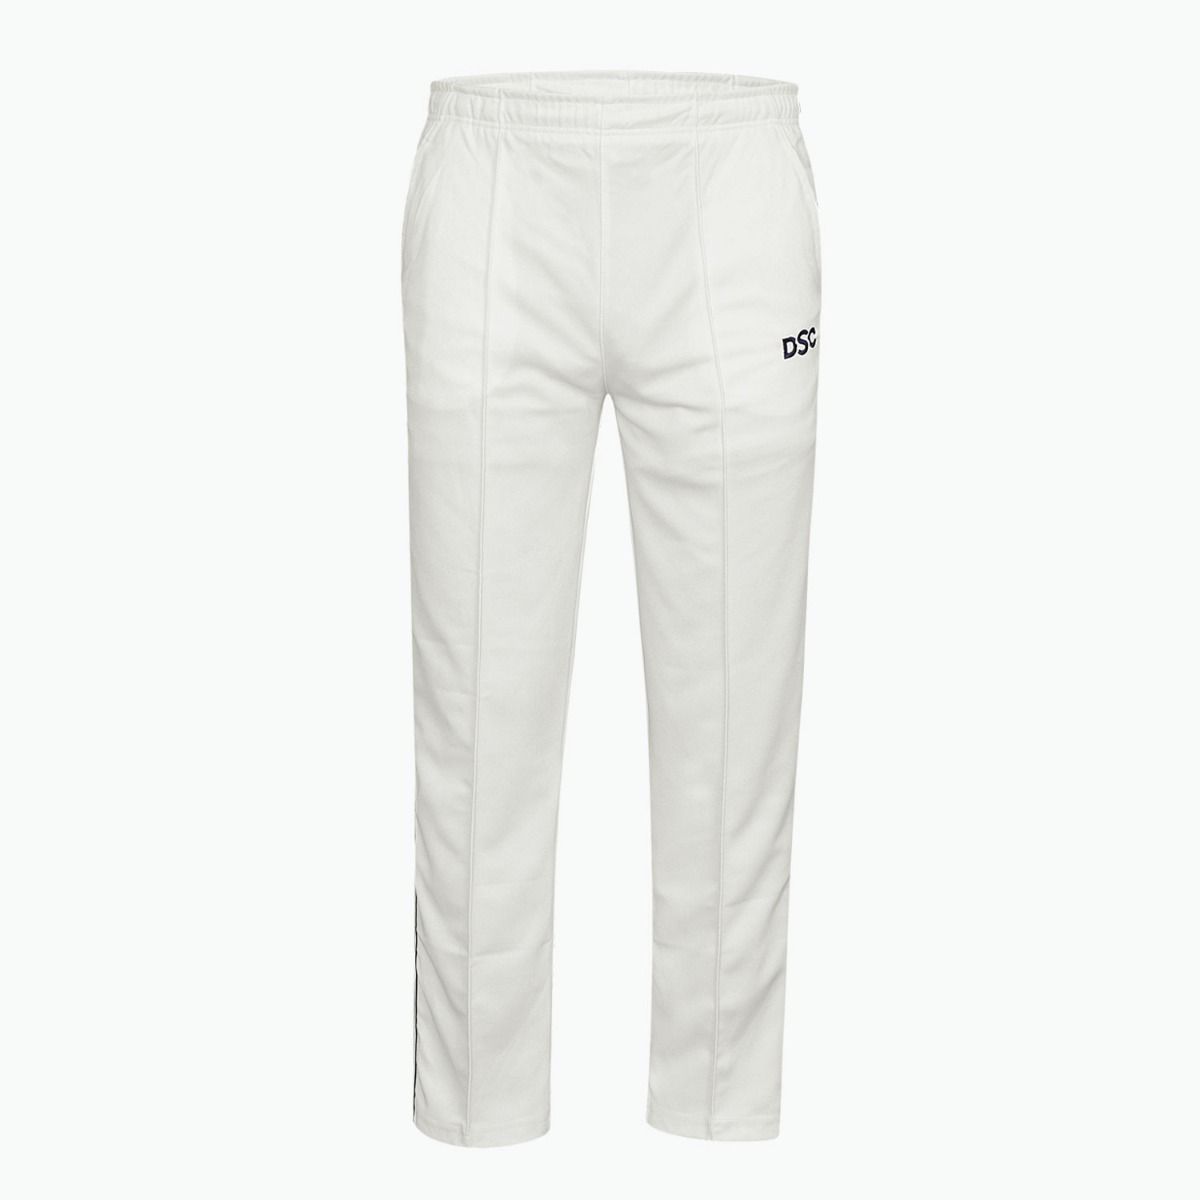 DSC Flite Cricket Trousers White